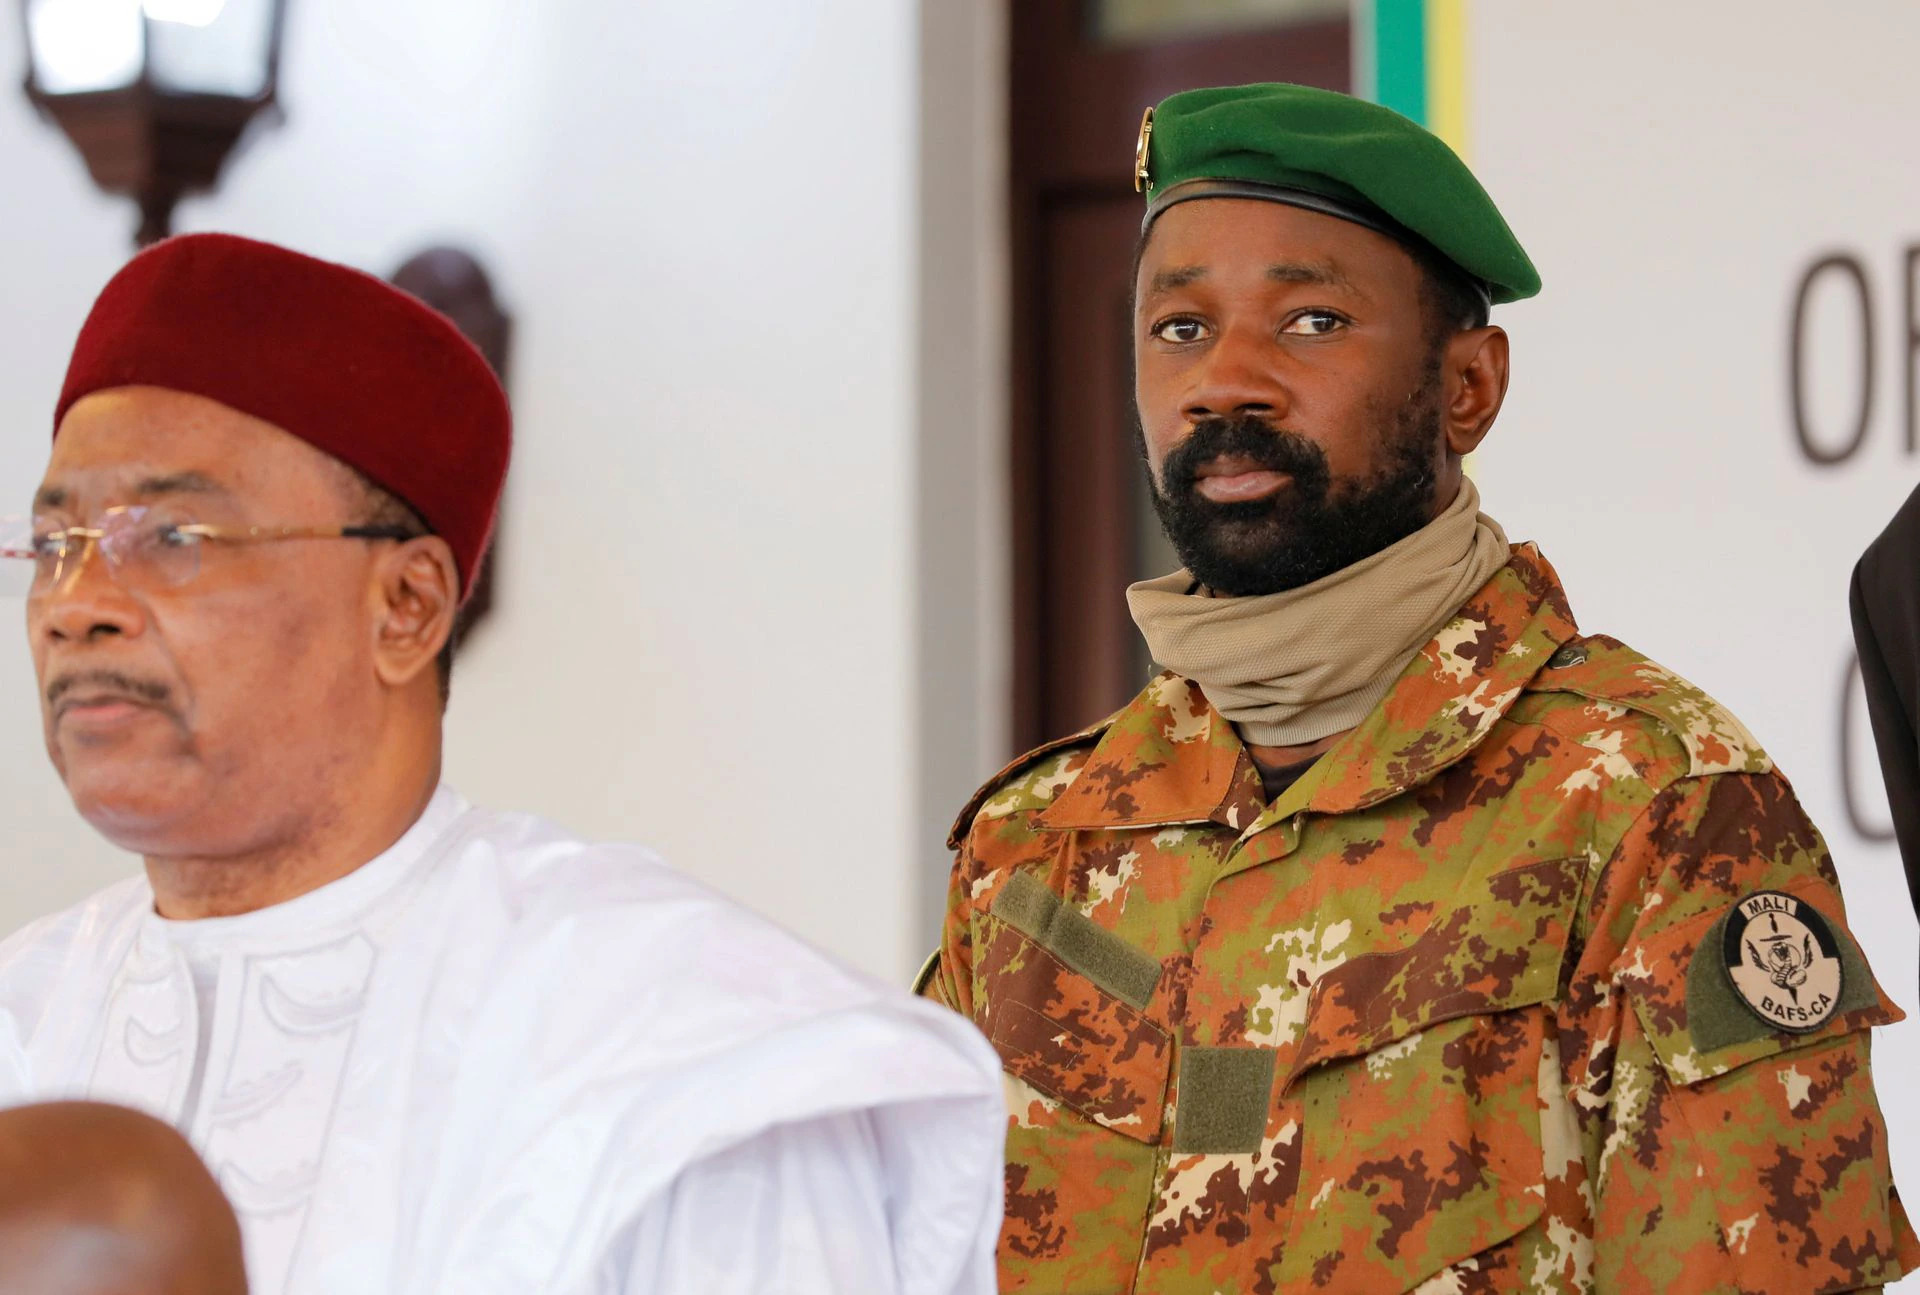 Malian military junta leader and interim President Assimi Goïta thanked Russian President Vladimir Putin for “support for Mali’s political transition